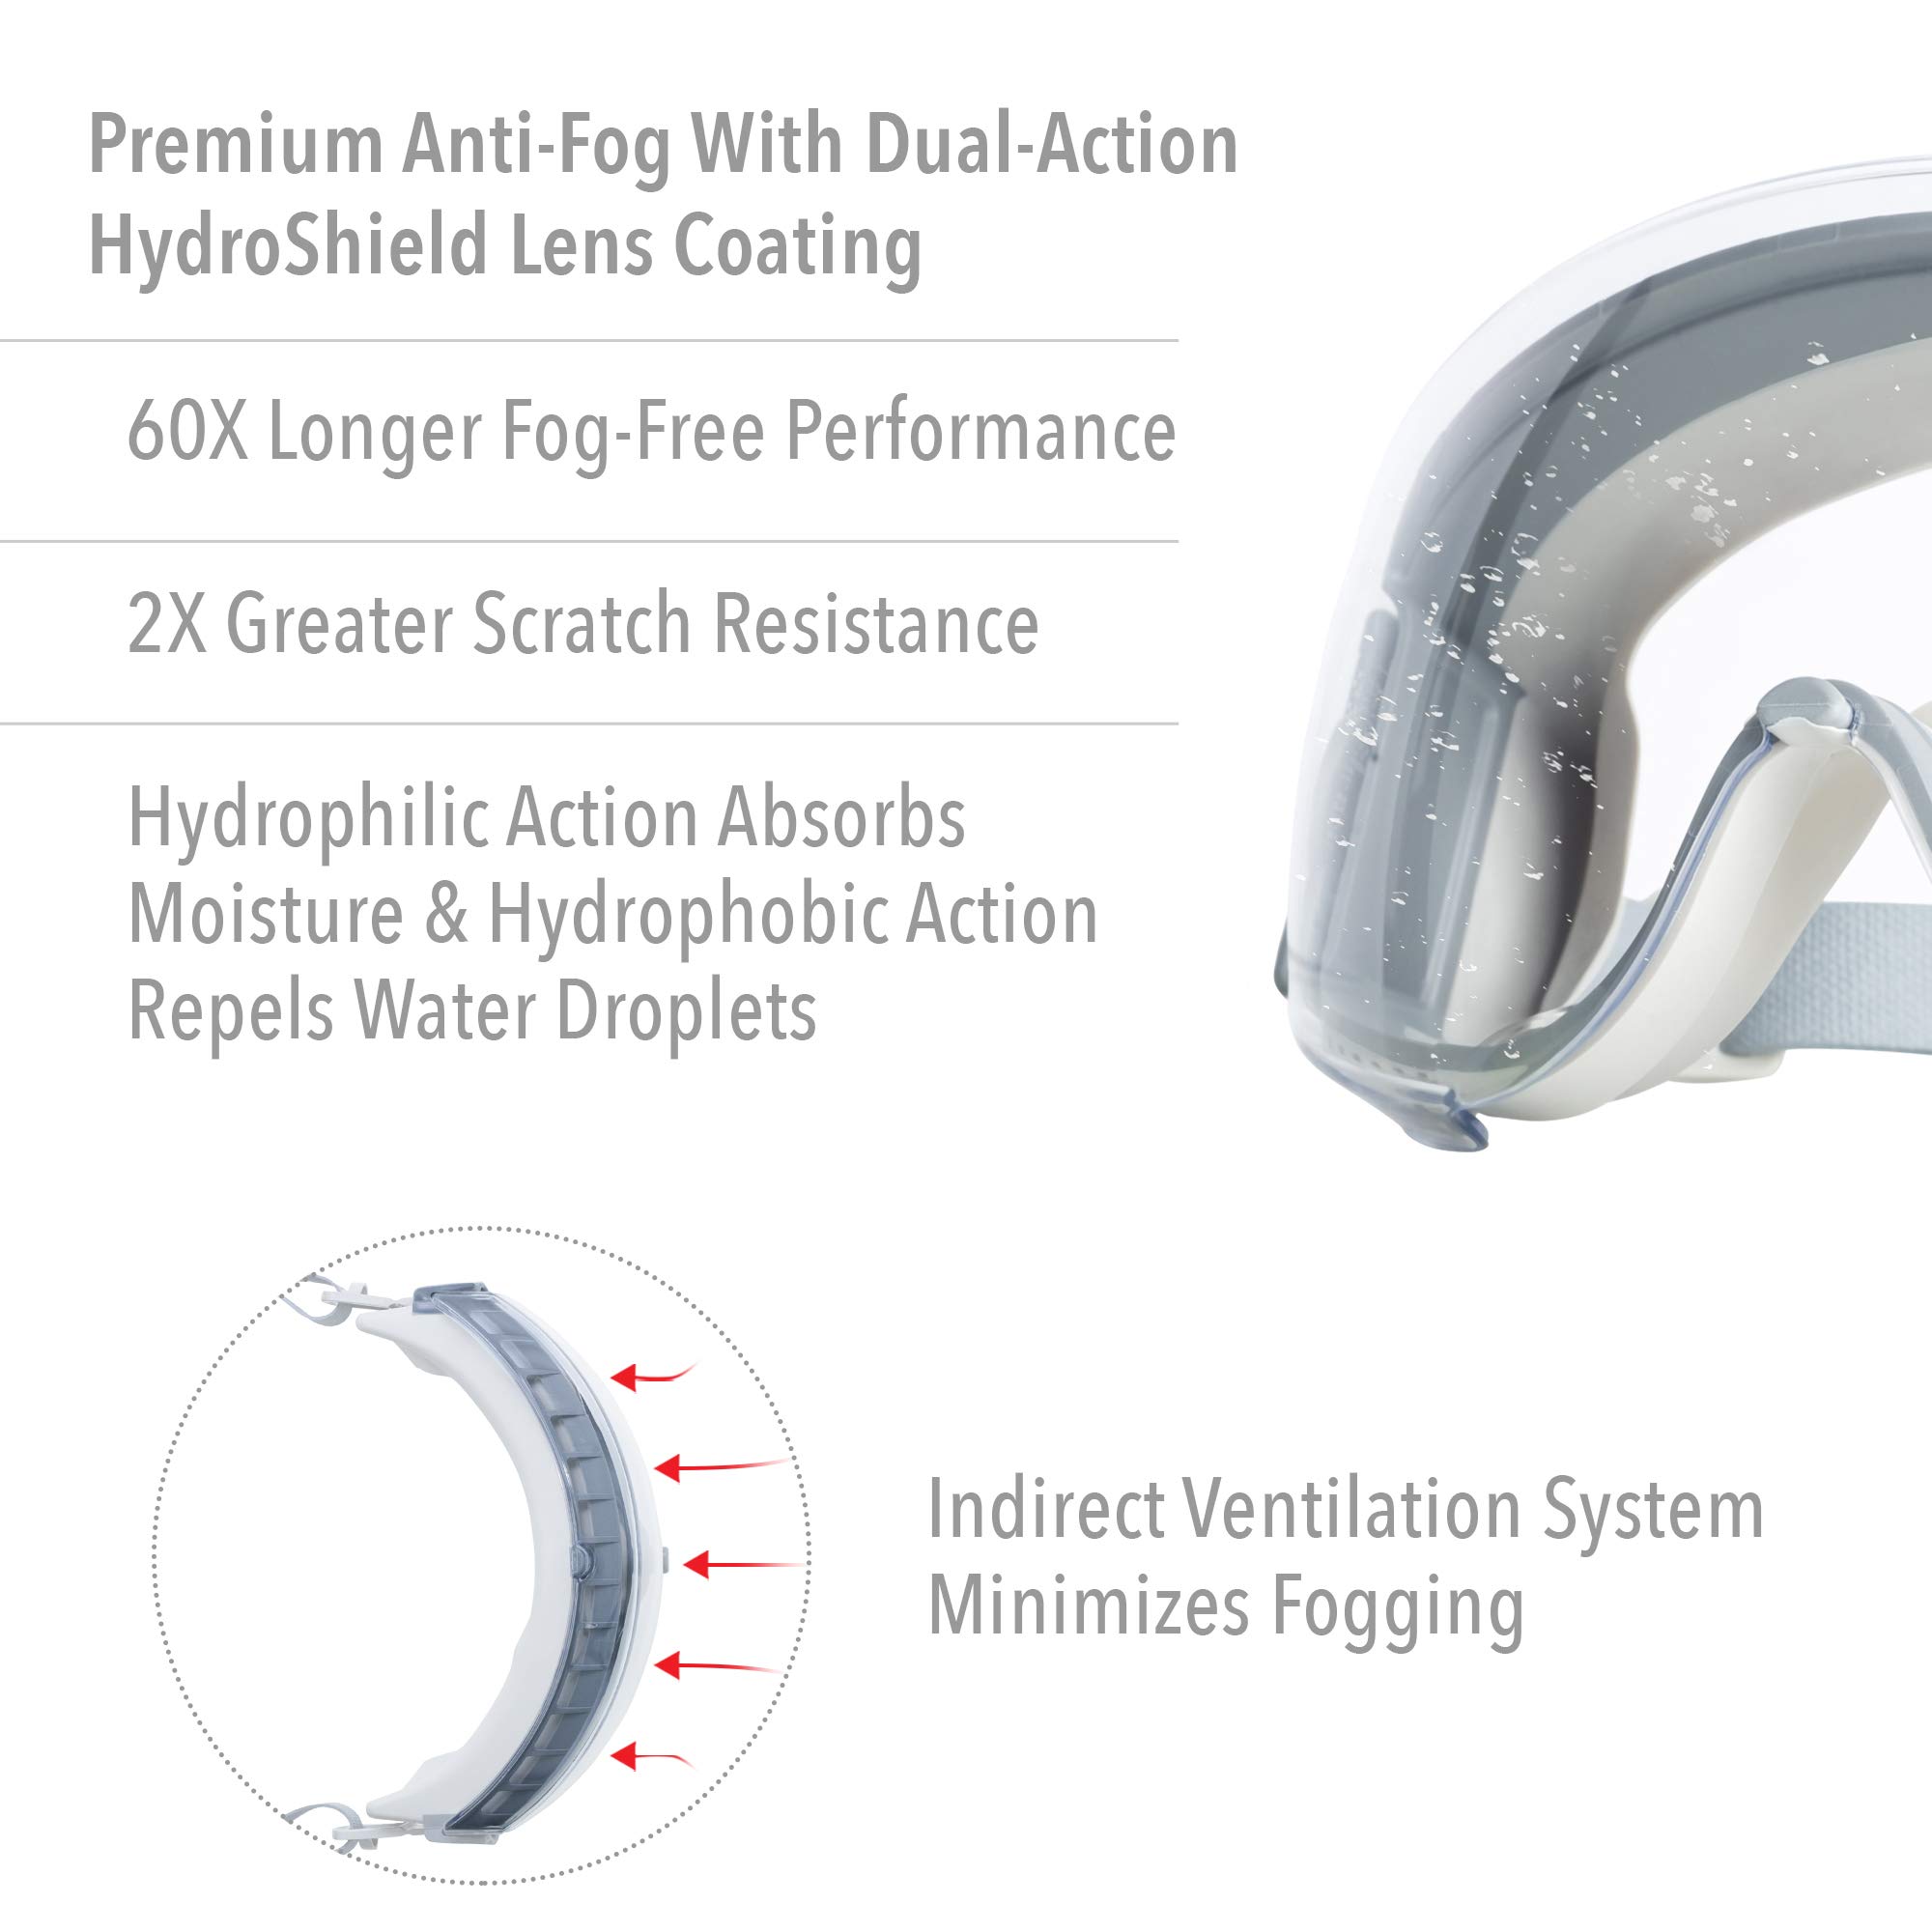 Honeywell Uvex Ademco Stealth Safety Goggles with Clear HydroShield Anti-Fog Lens, Grey Body & Neoprene Headband (S3960HS)